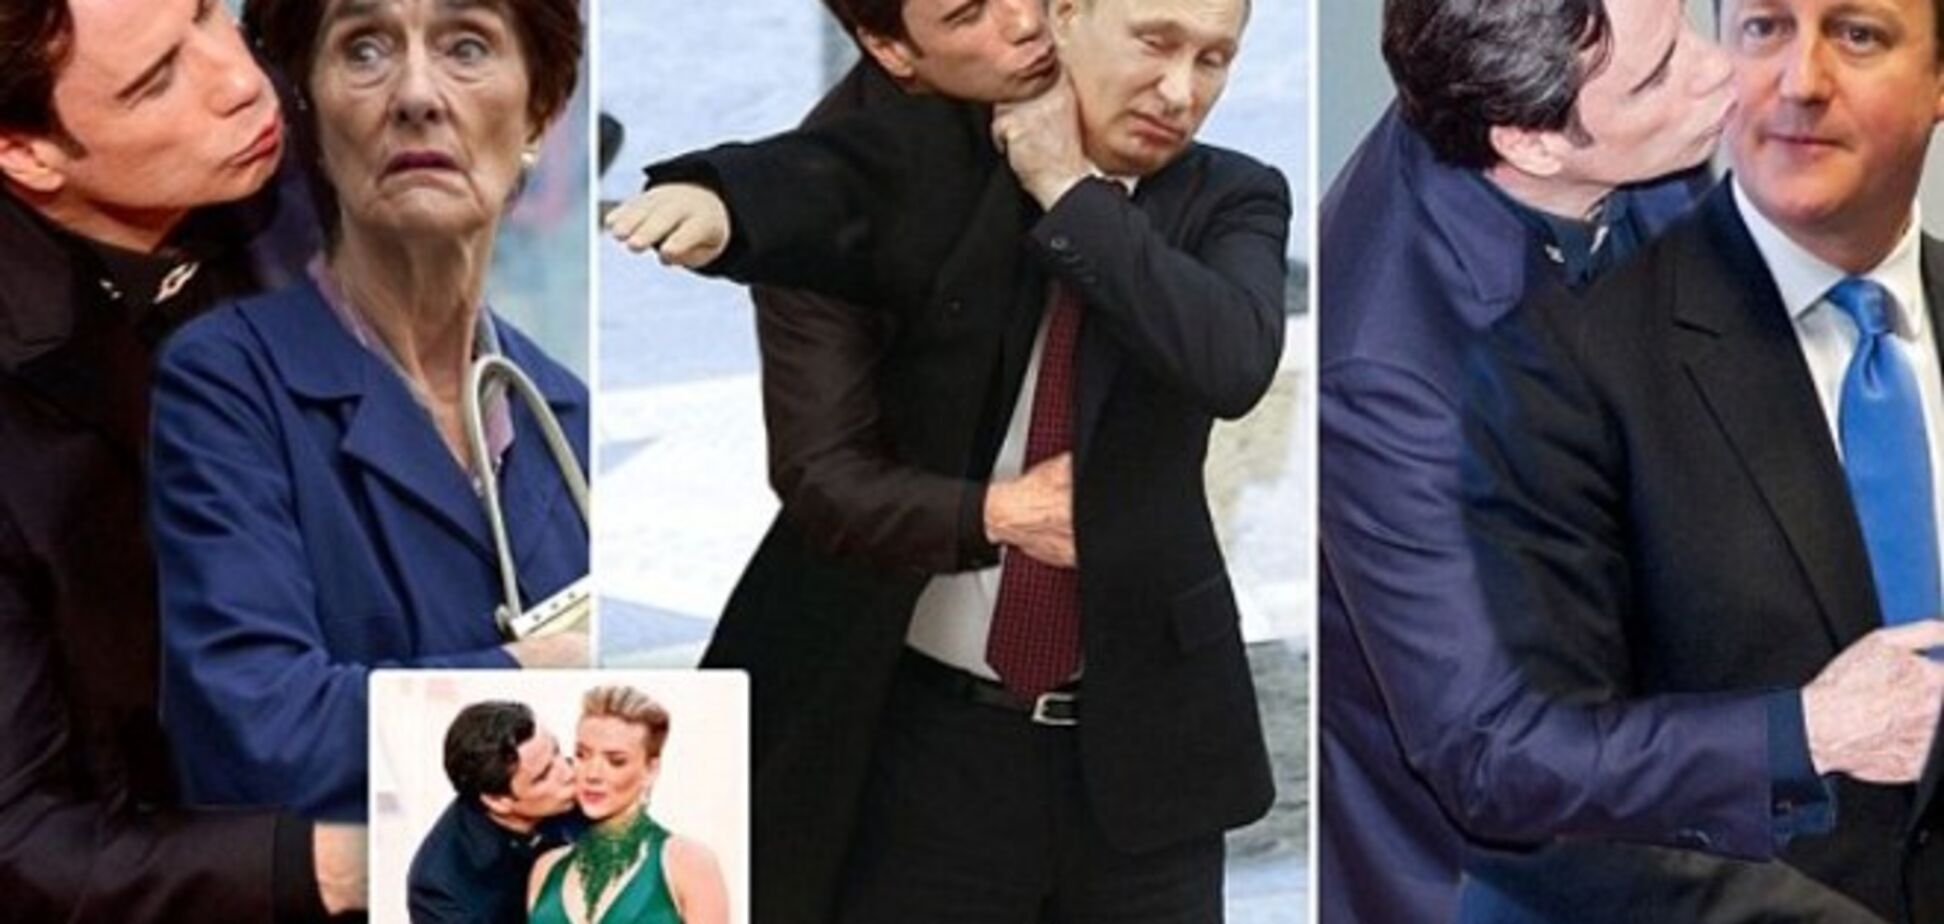 Джон Траволта, целующий Путина и Ким Чен Ына, взорвал интернет